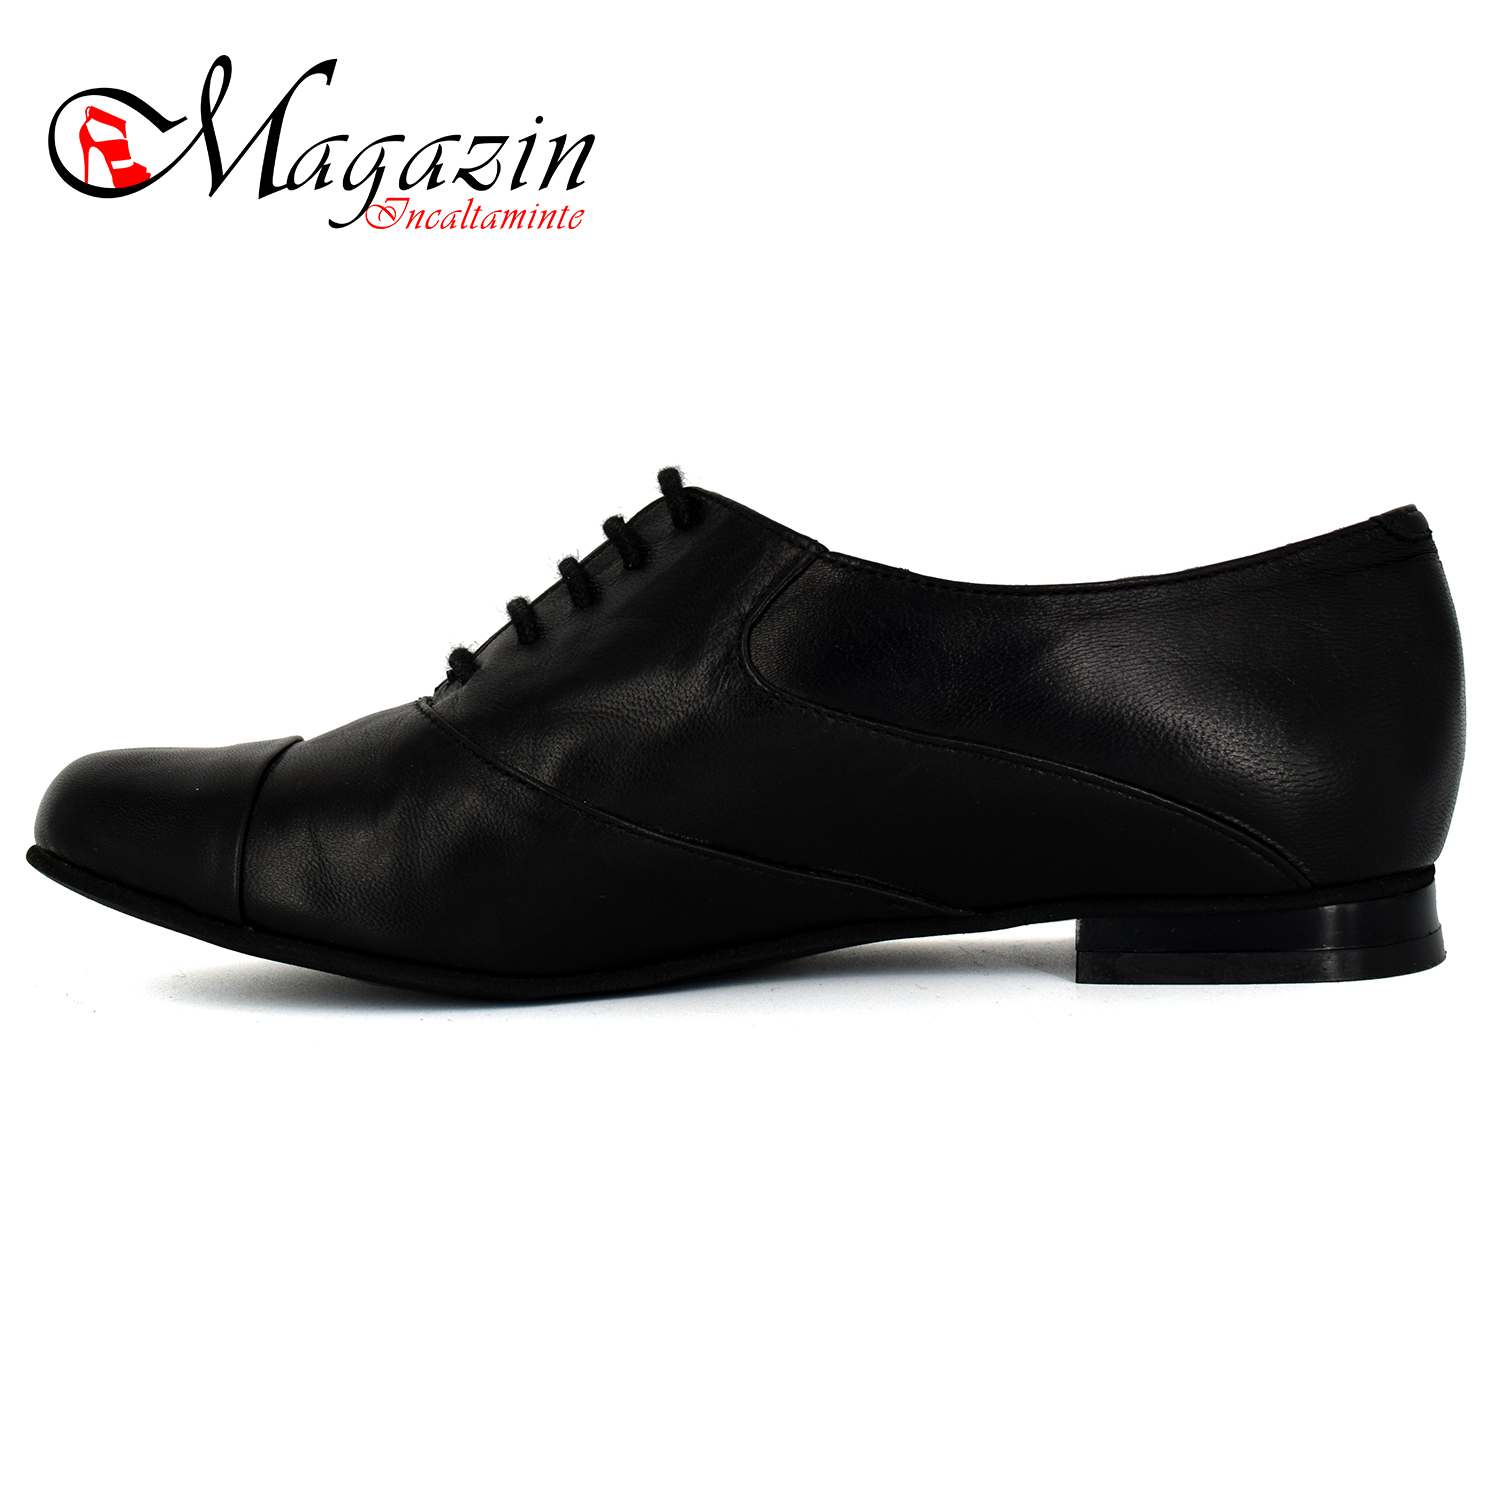 Pantofi dama piele naturala - Caspian - Model 026N